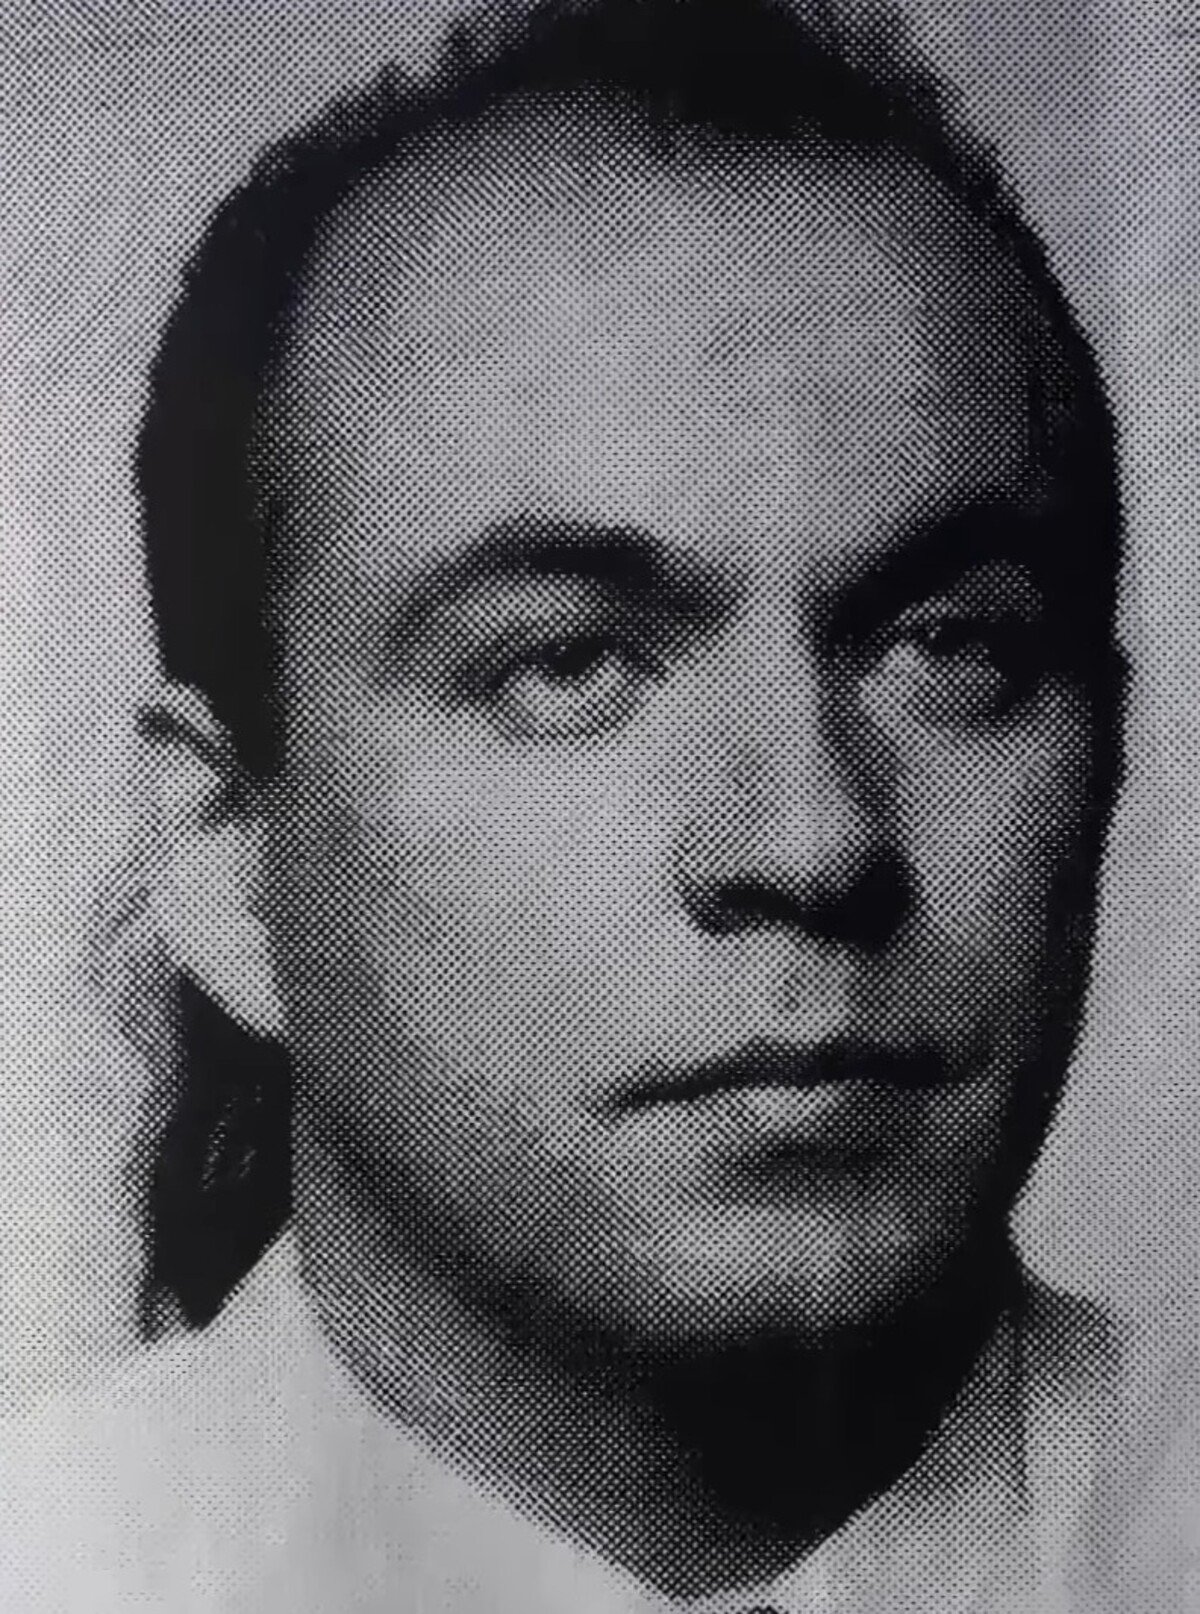 Peter Muszka